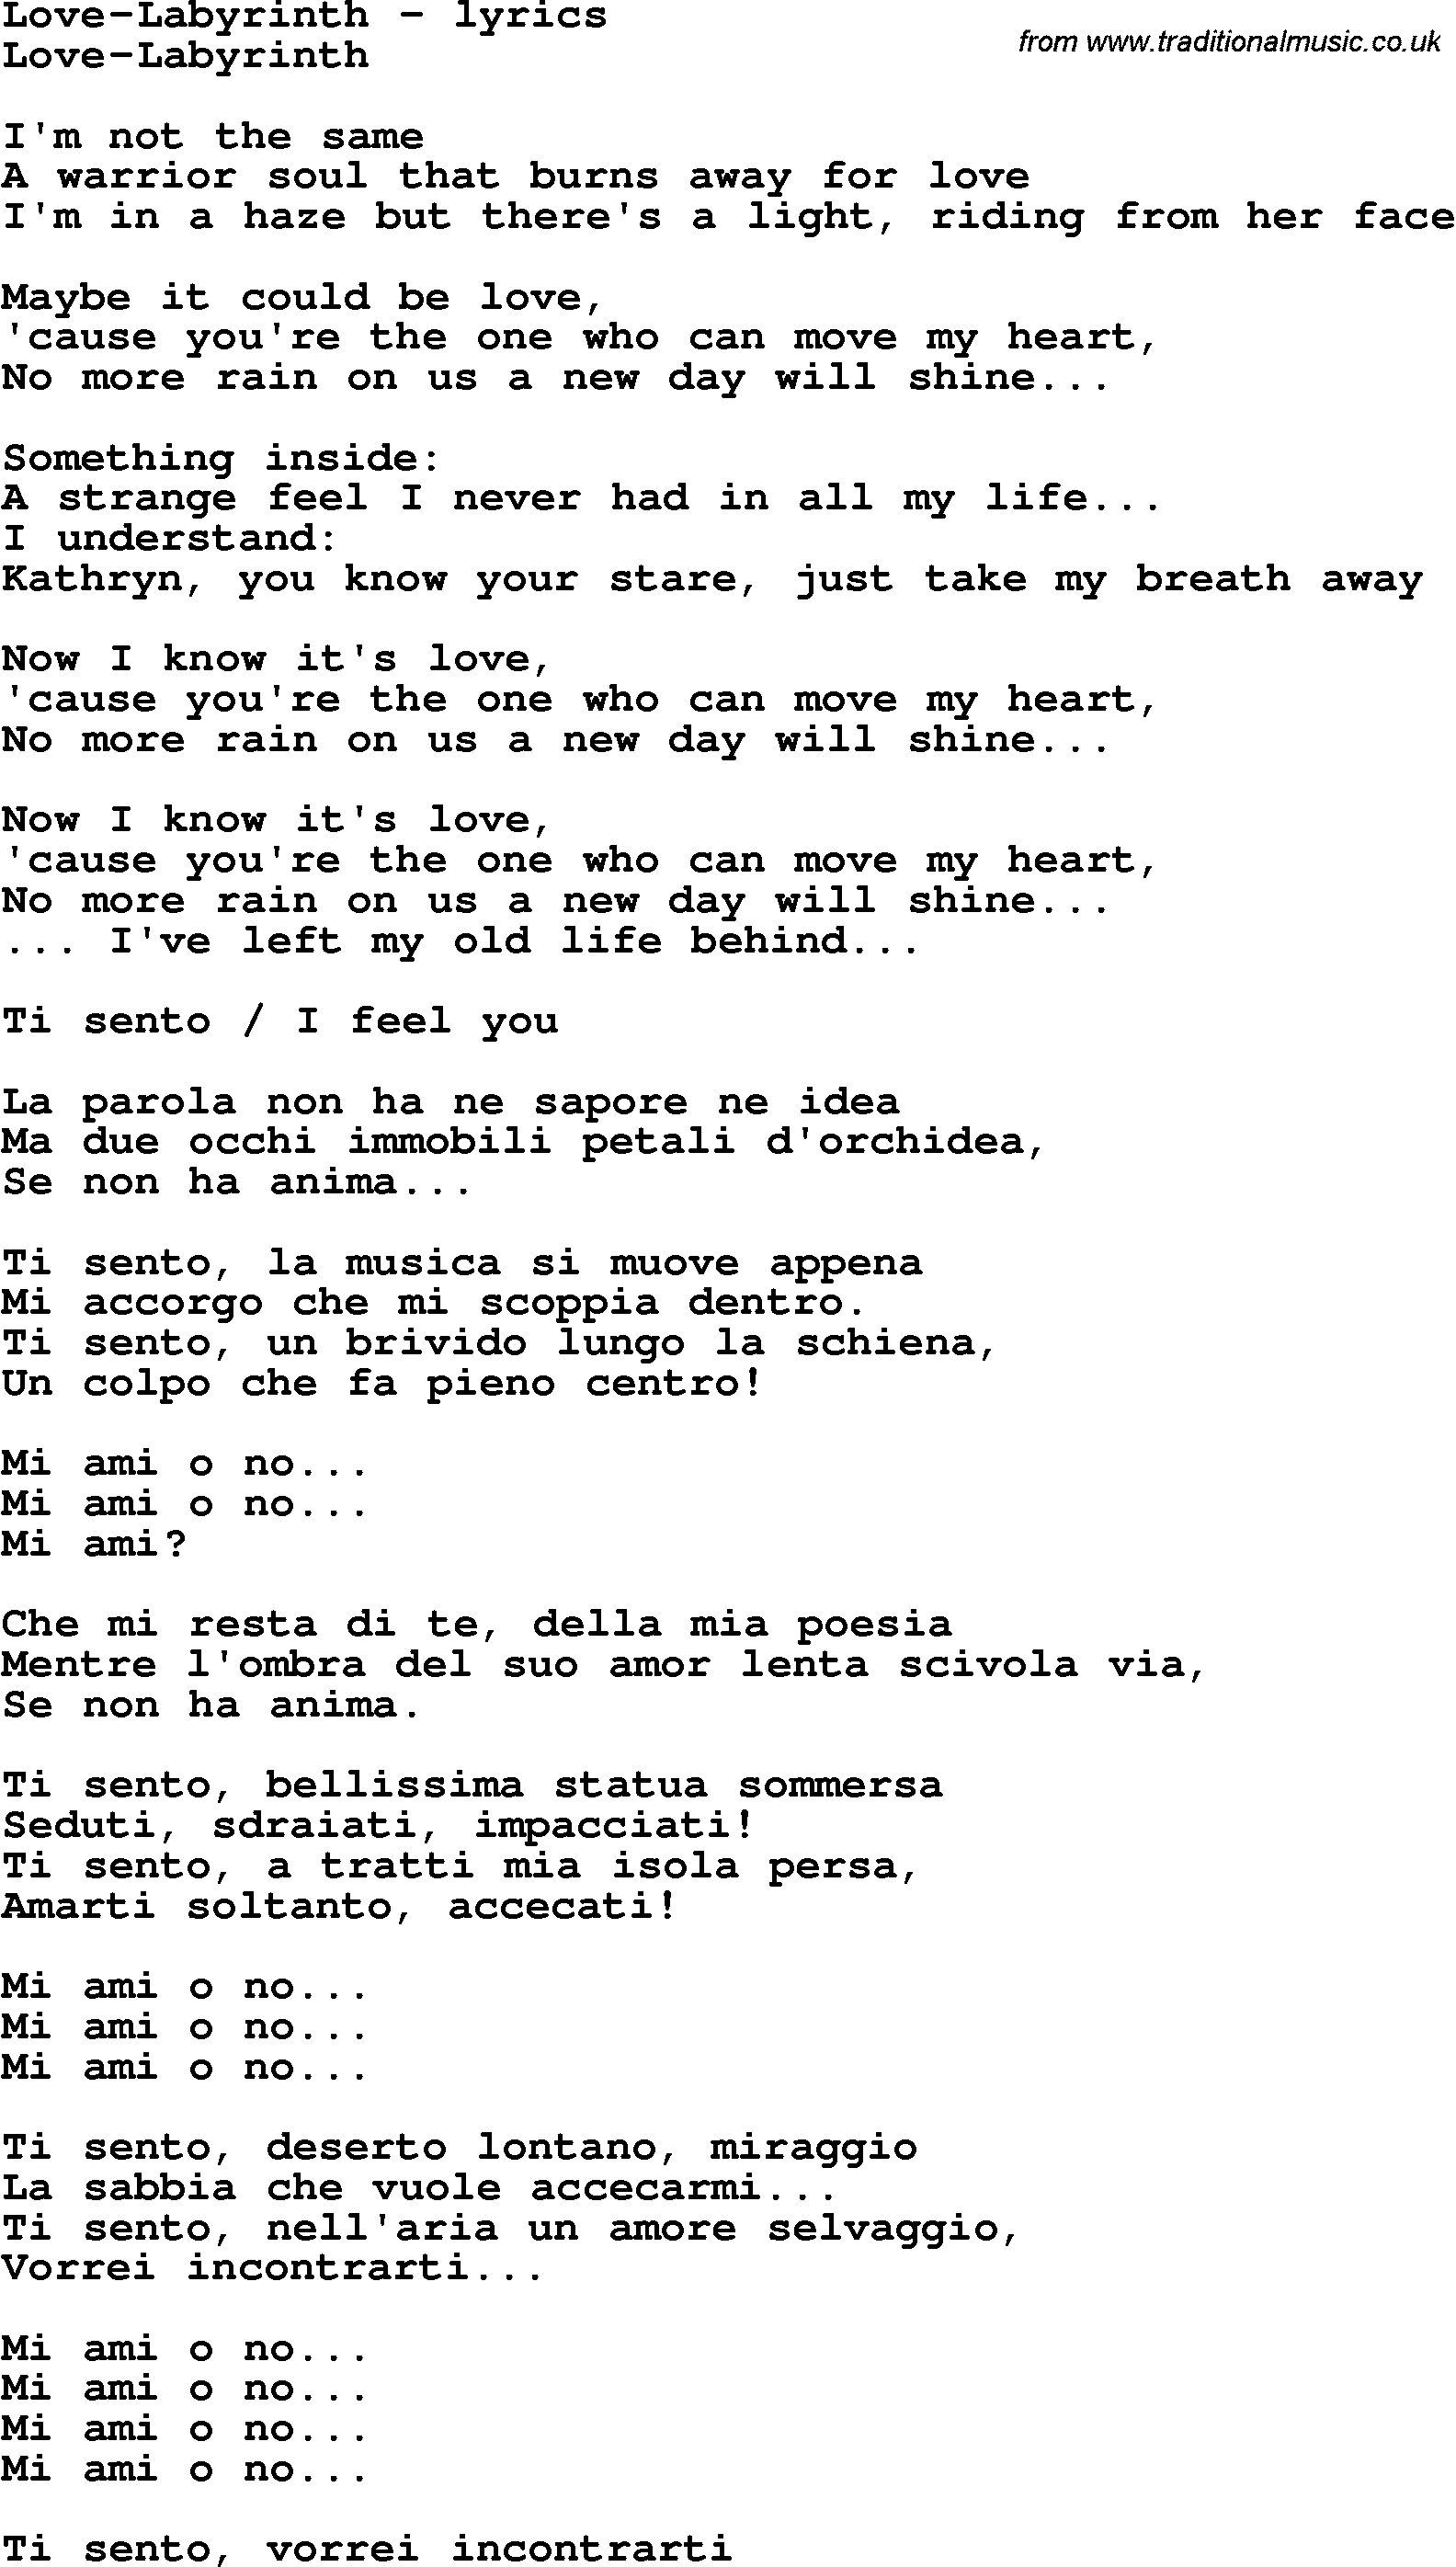 Love Song Lyrics for: Love-Labyrinth